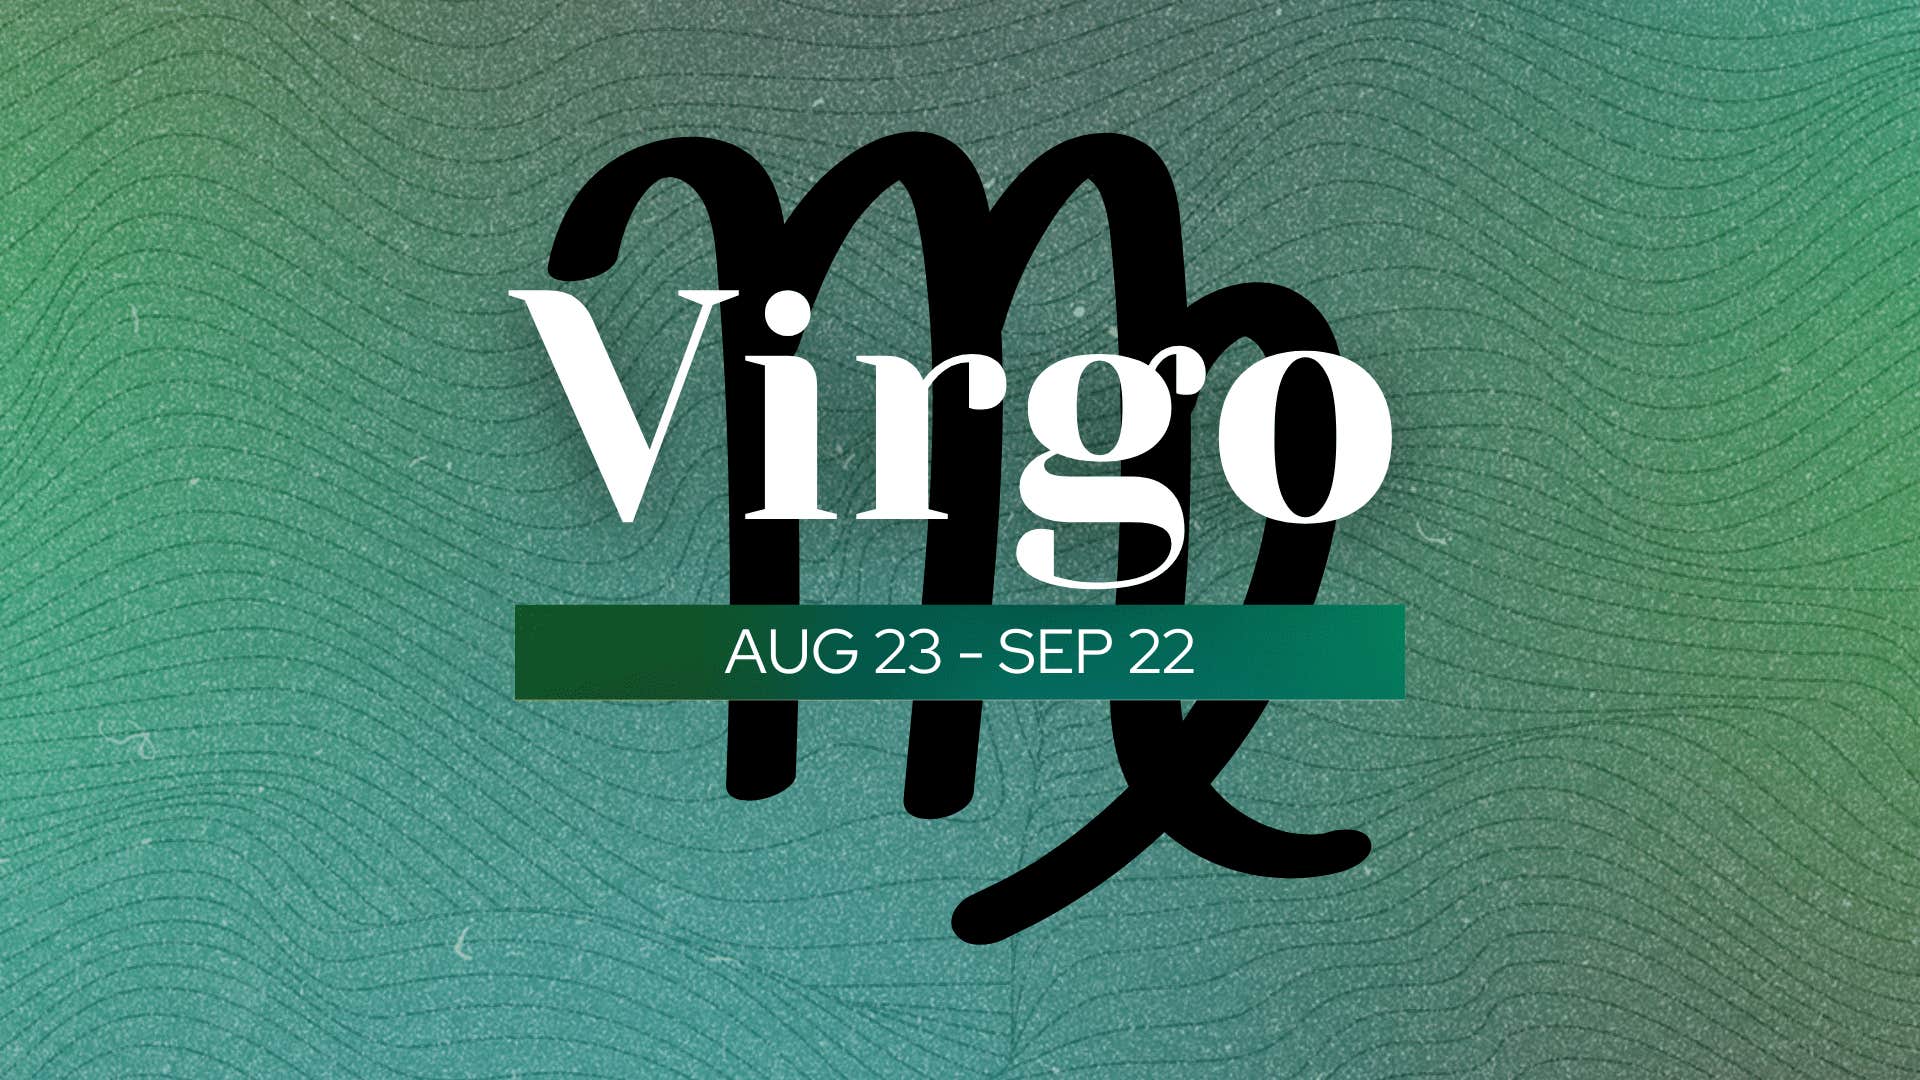 awkward relationship habits for virgo